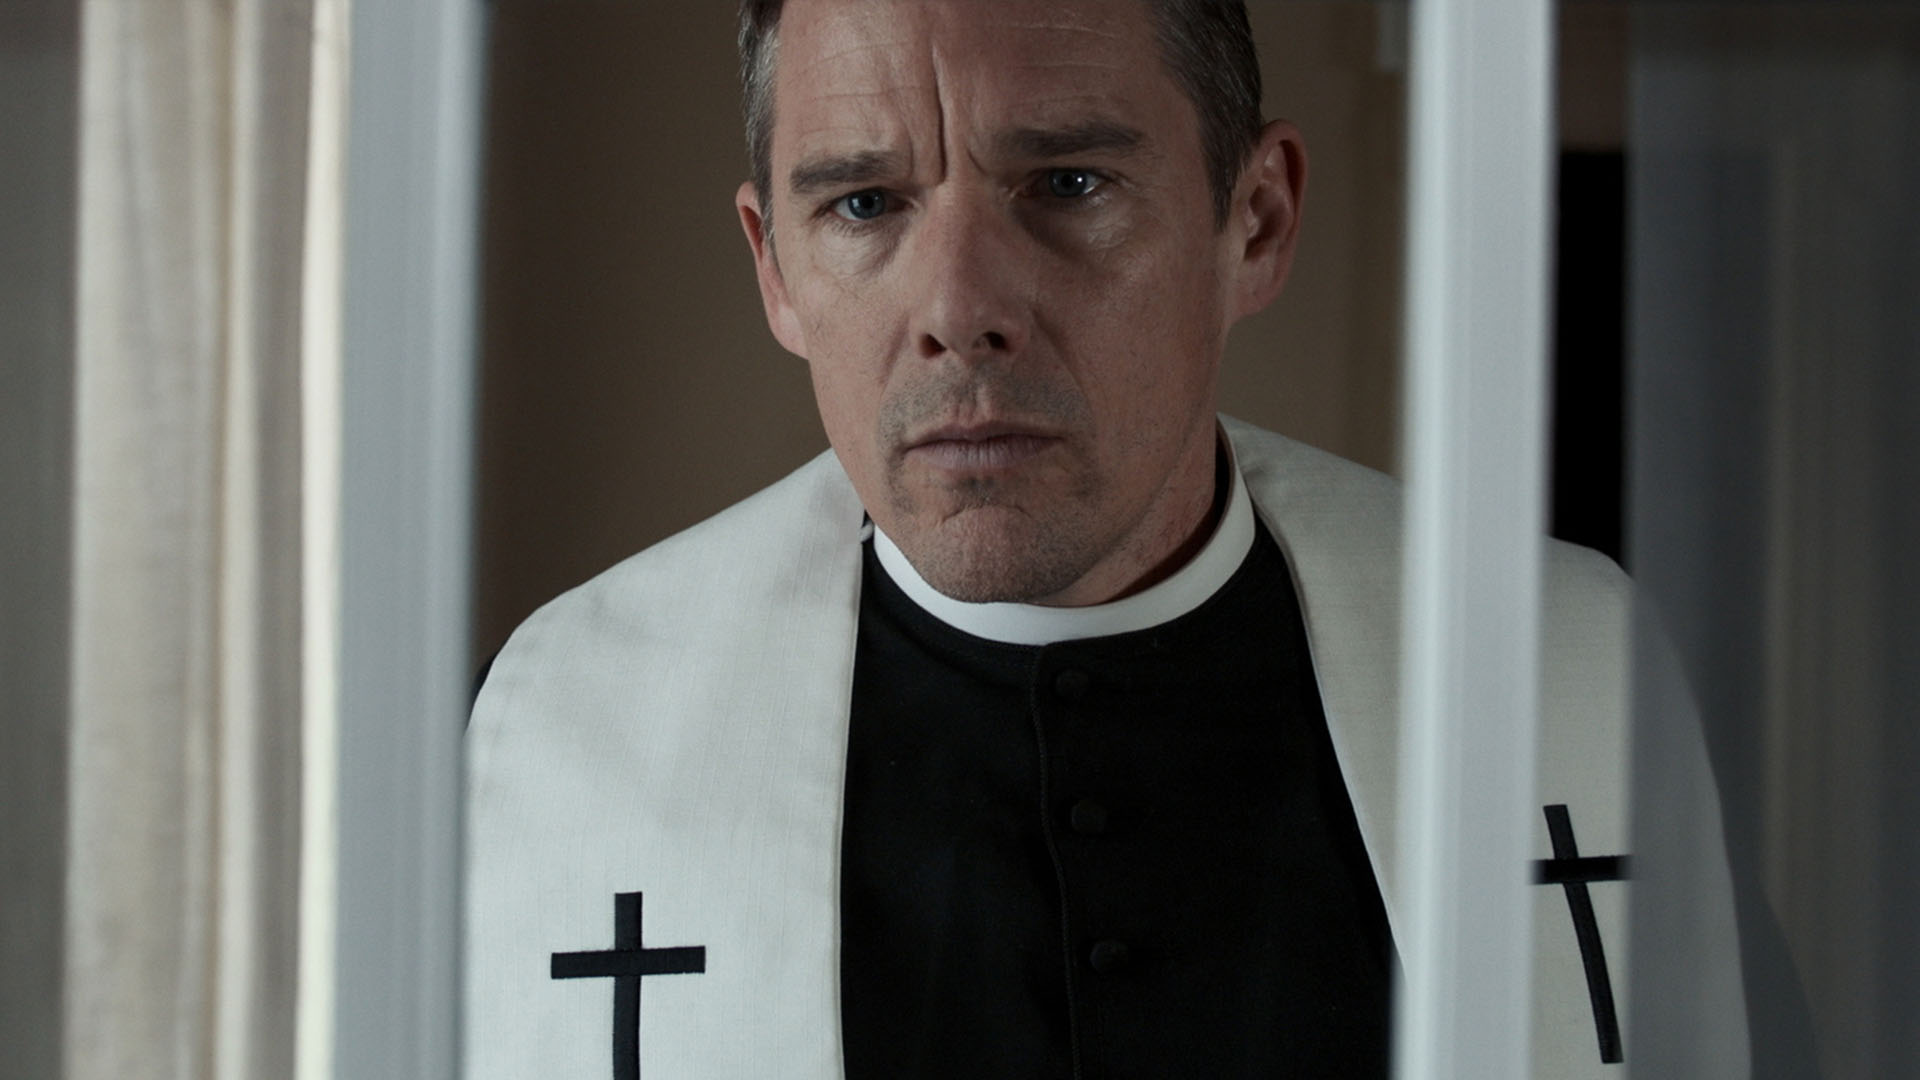 Trailer still frame from First Reformed, priest